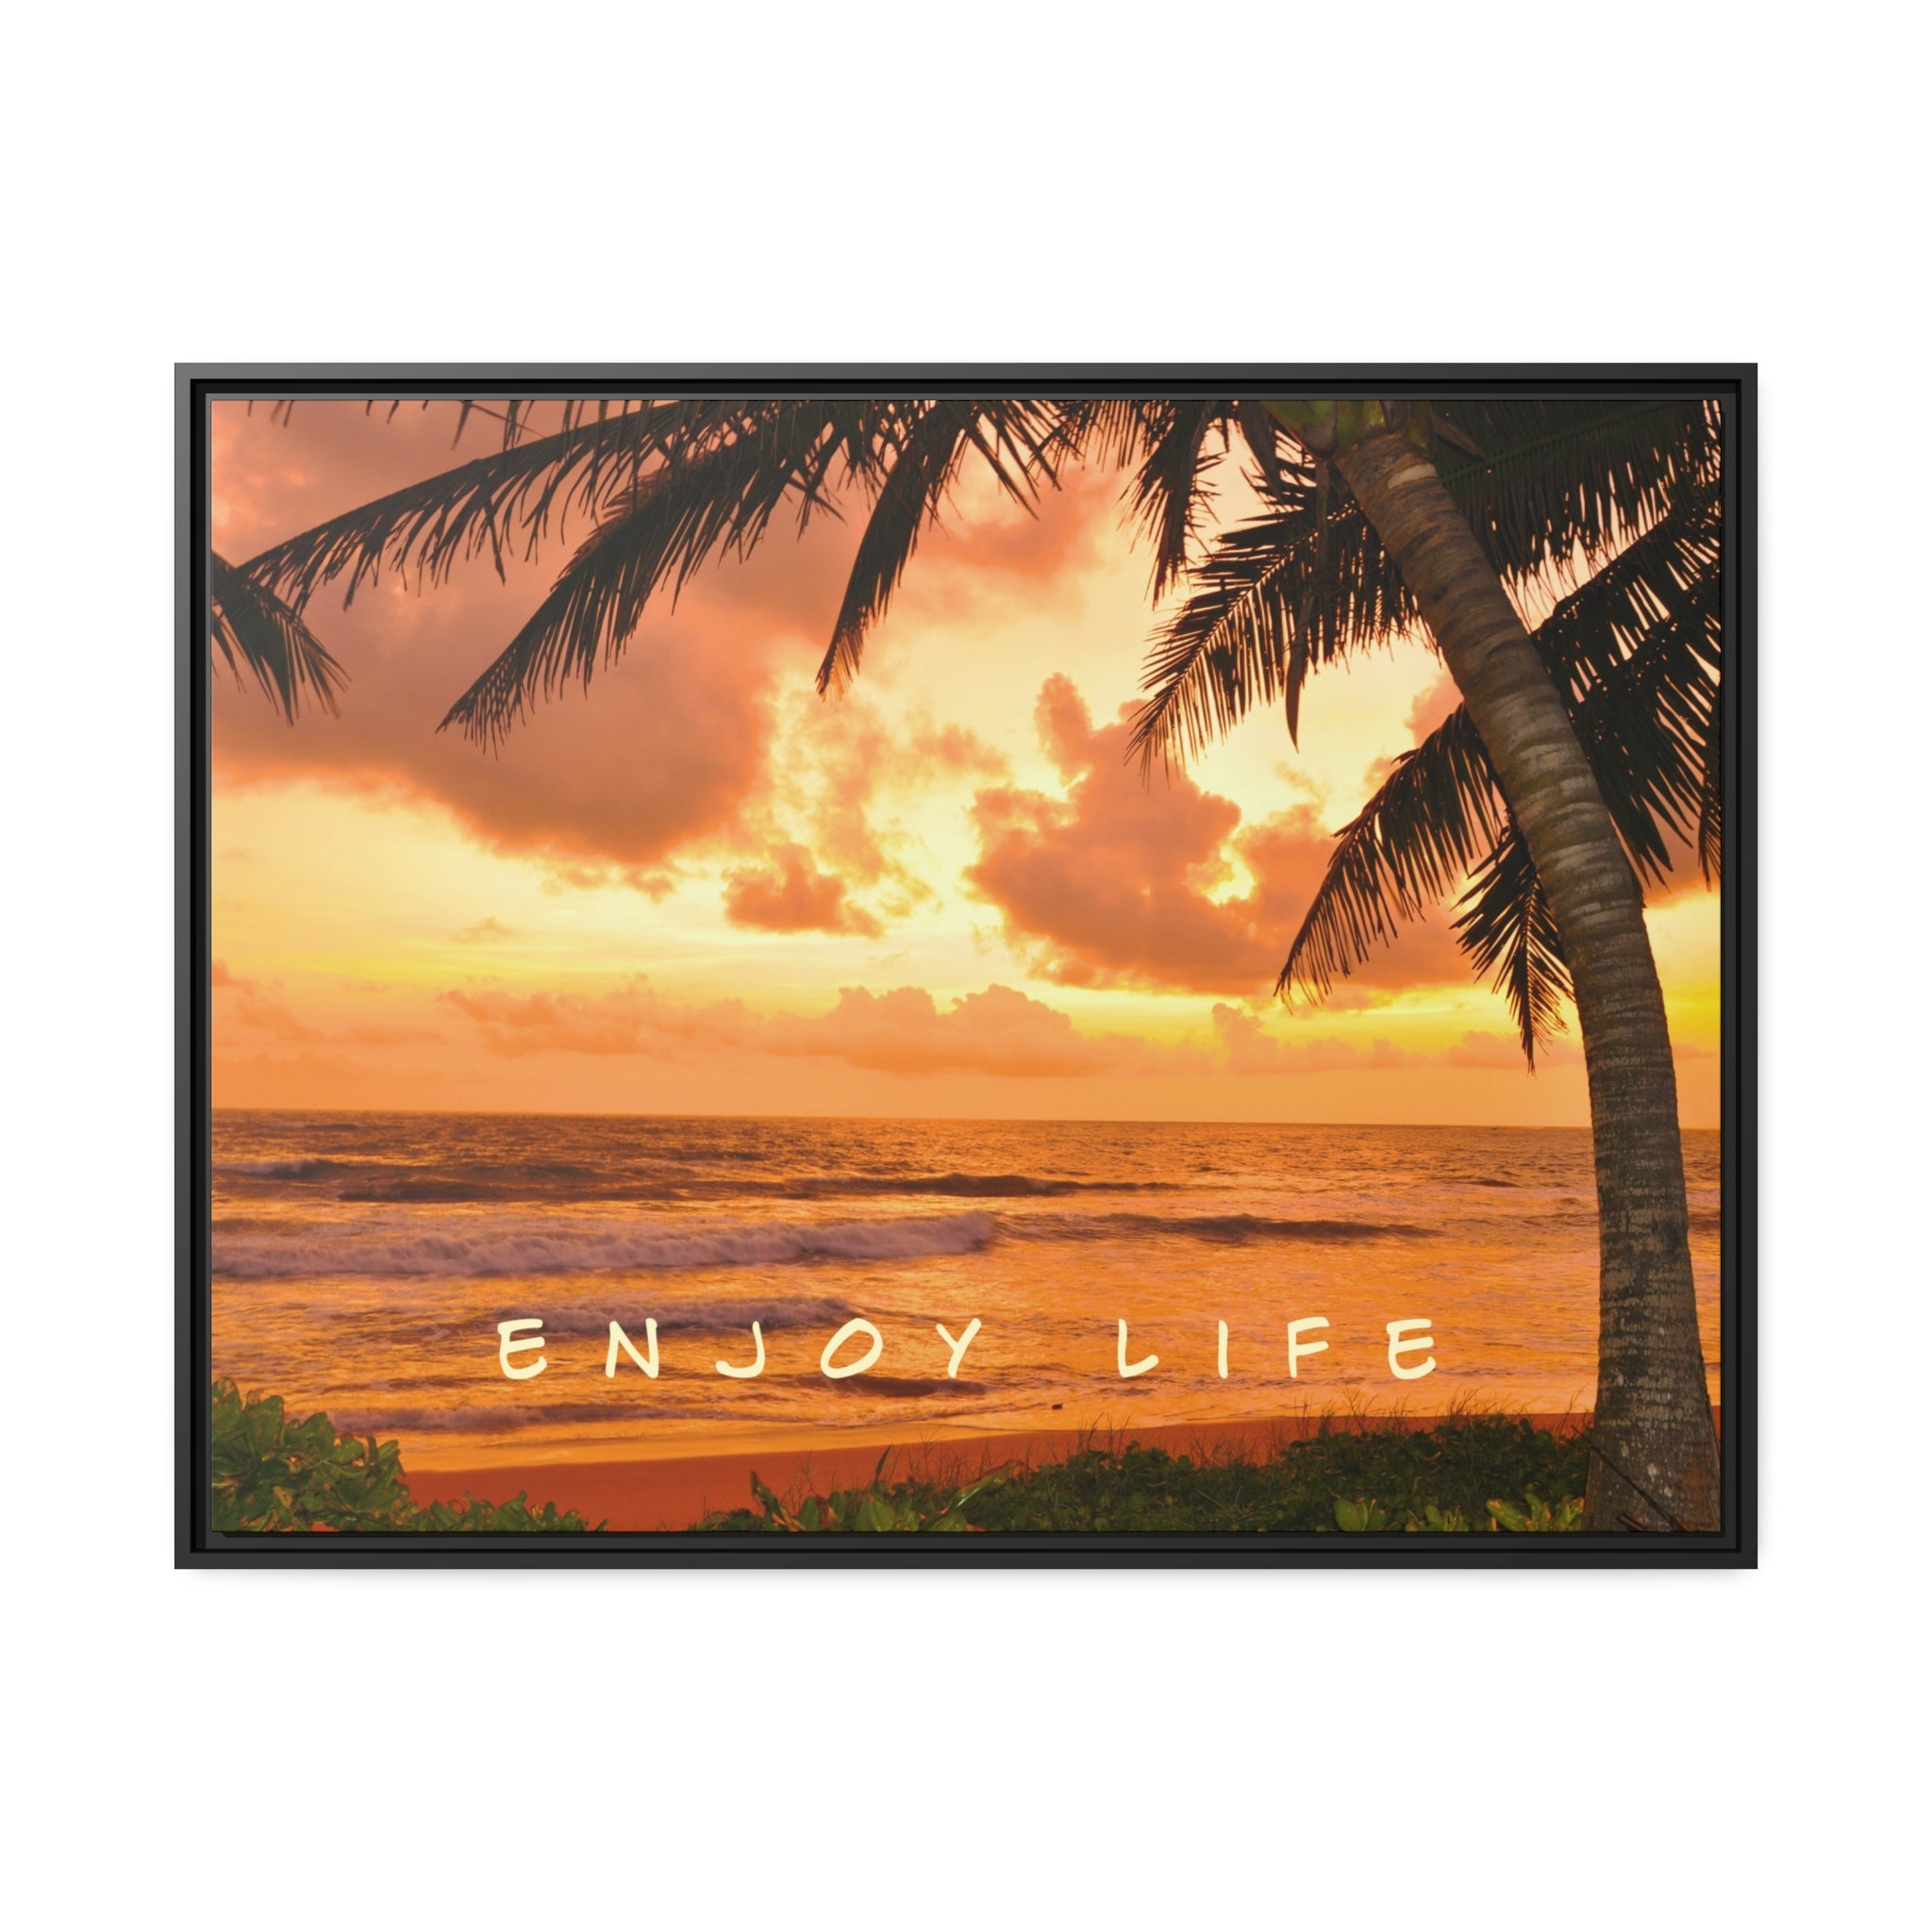 Enjoy Life - Sunset - Wall Art additional image 4